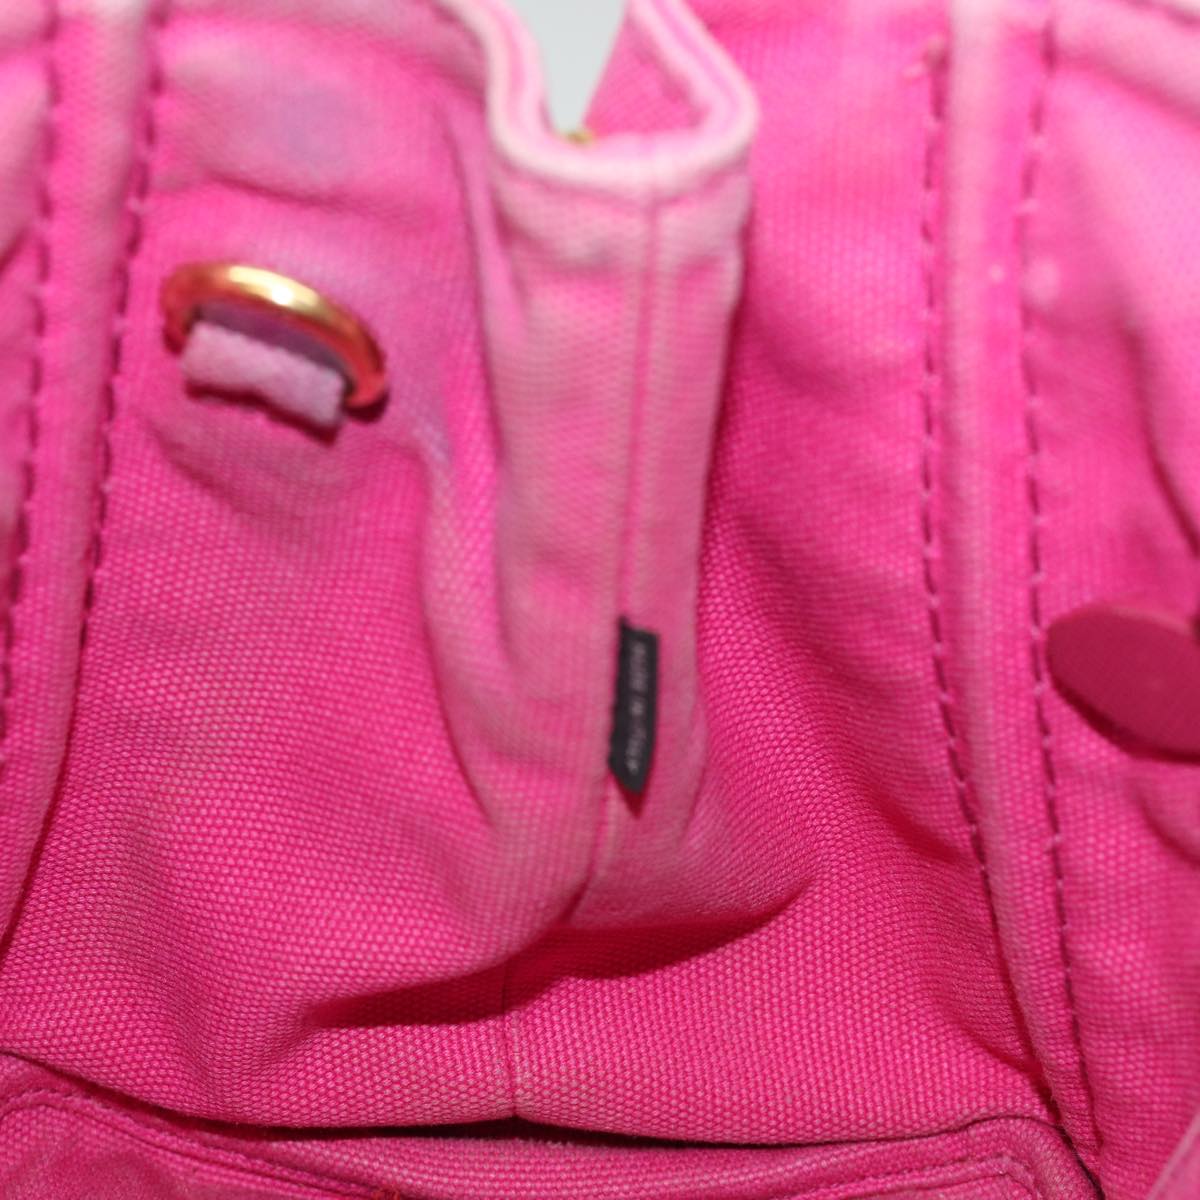 PRADA Canapa PM Hand Bag Canvas 2way Pink Auth 76984